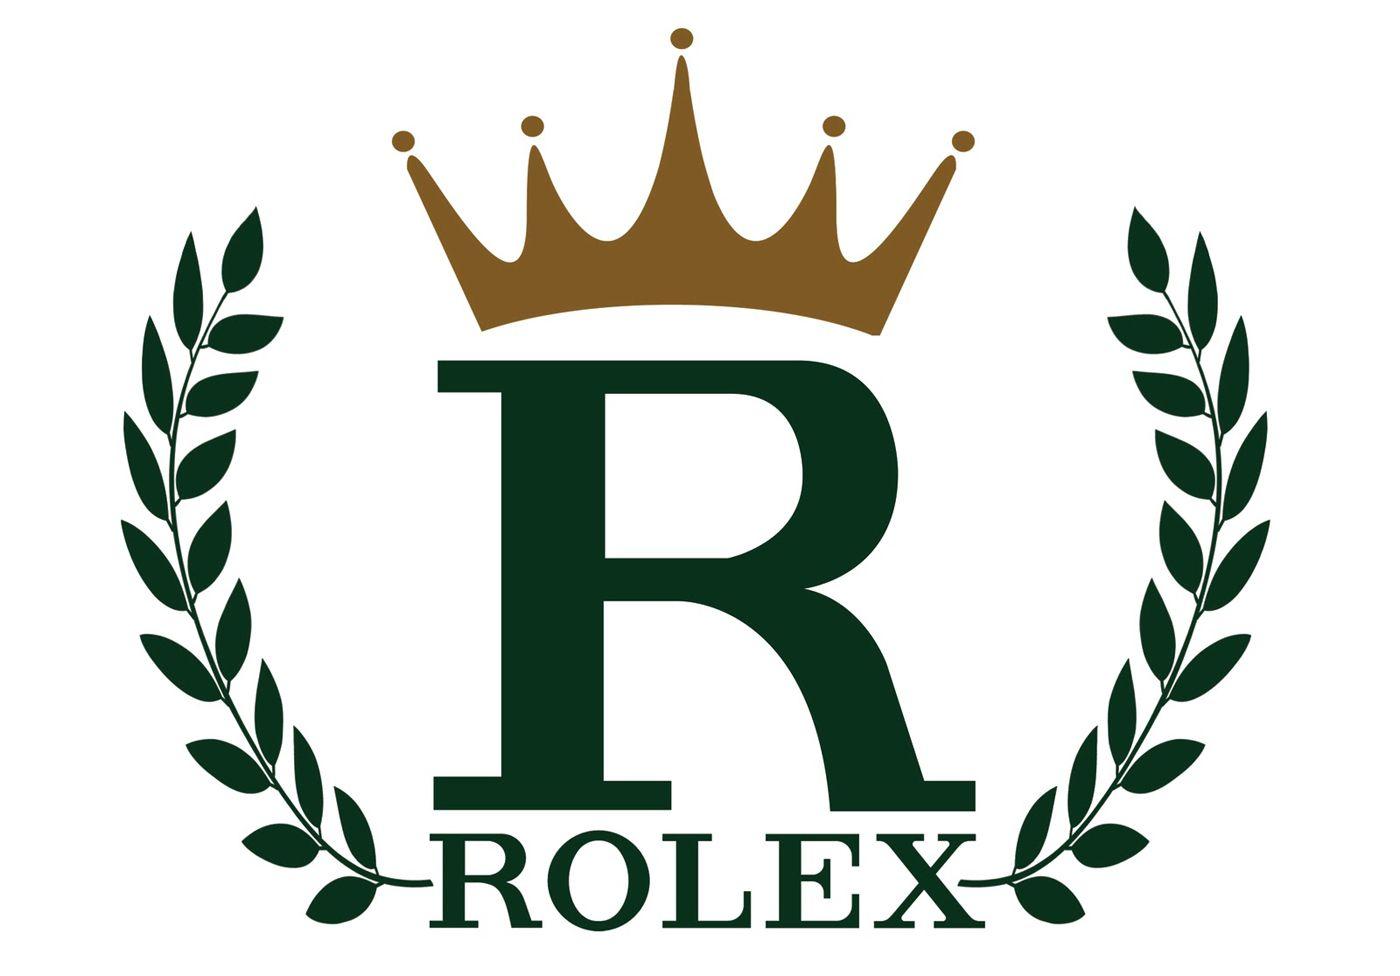 Rolex Logo - Rolex Logo, Rolex Symbol, Meaning, History and Evolution